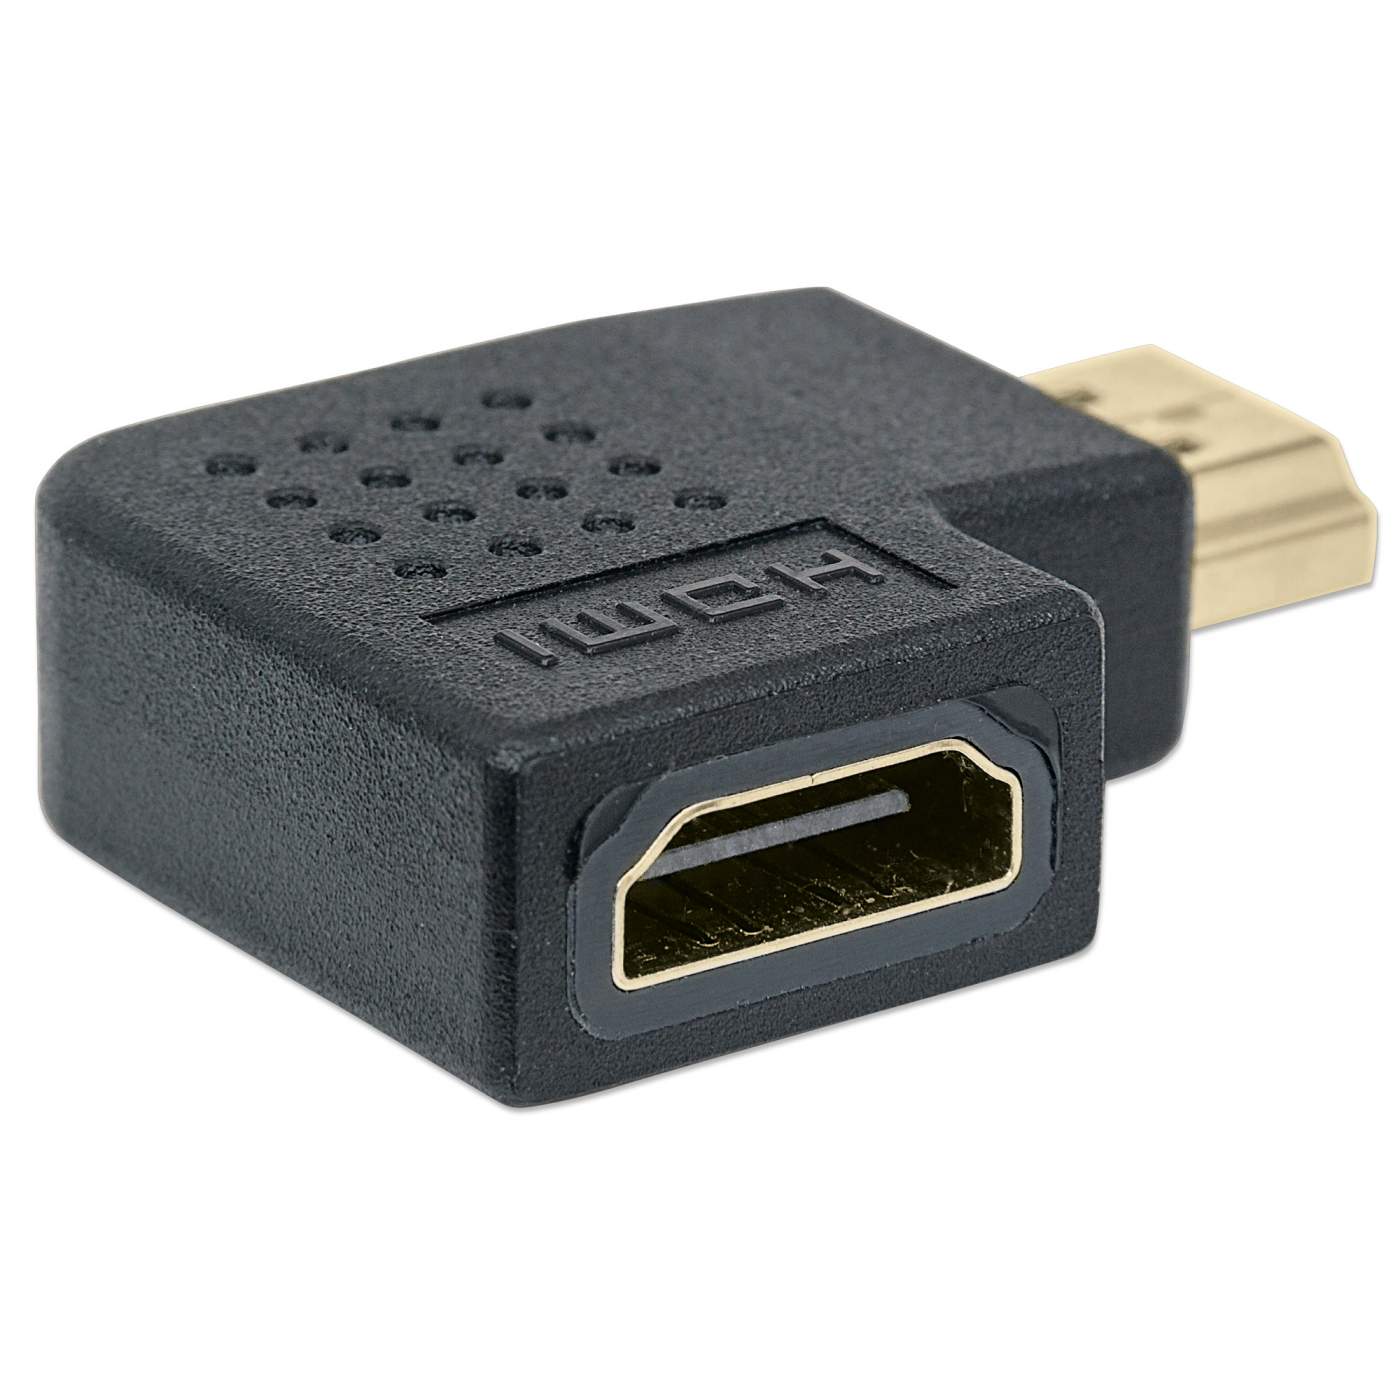 HDMI Adapter Image 3